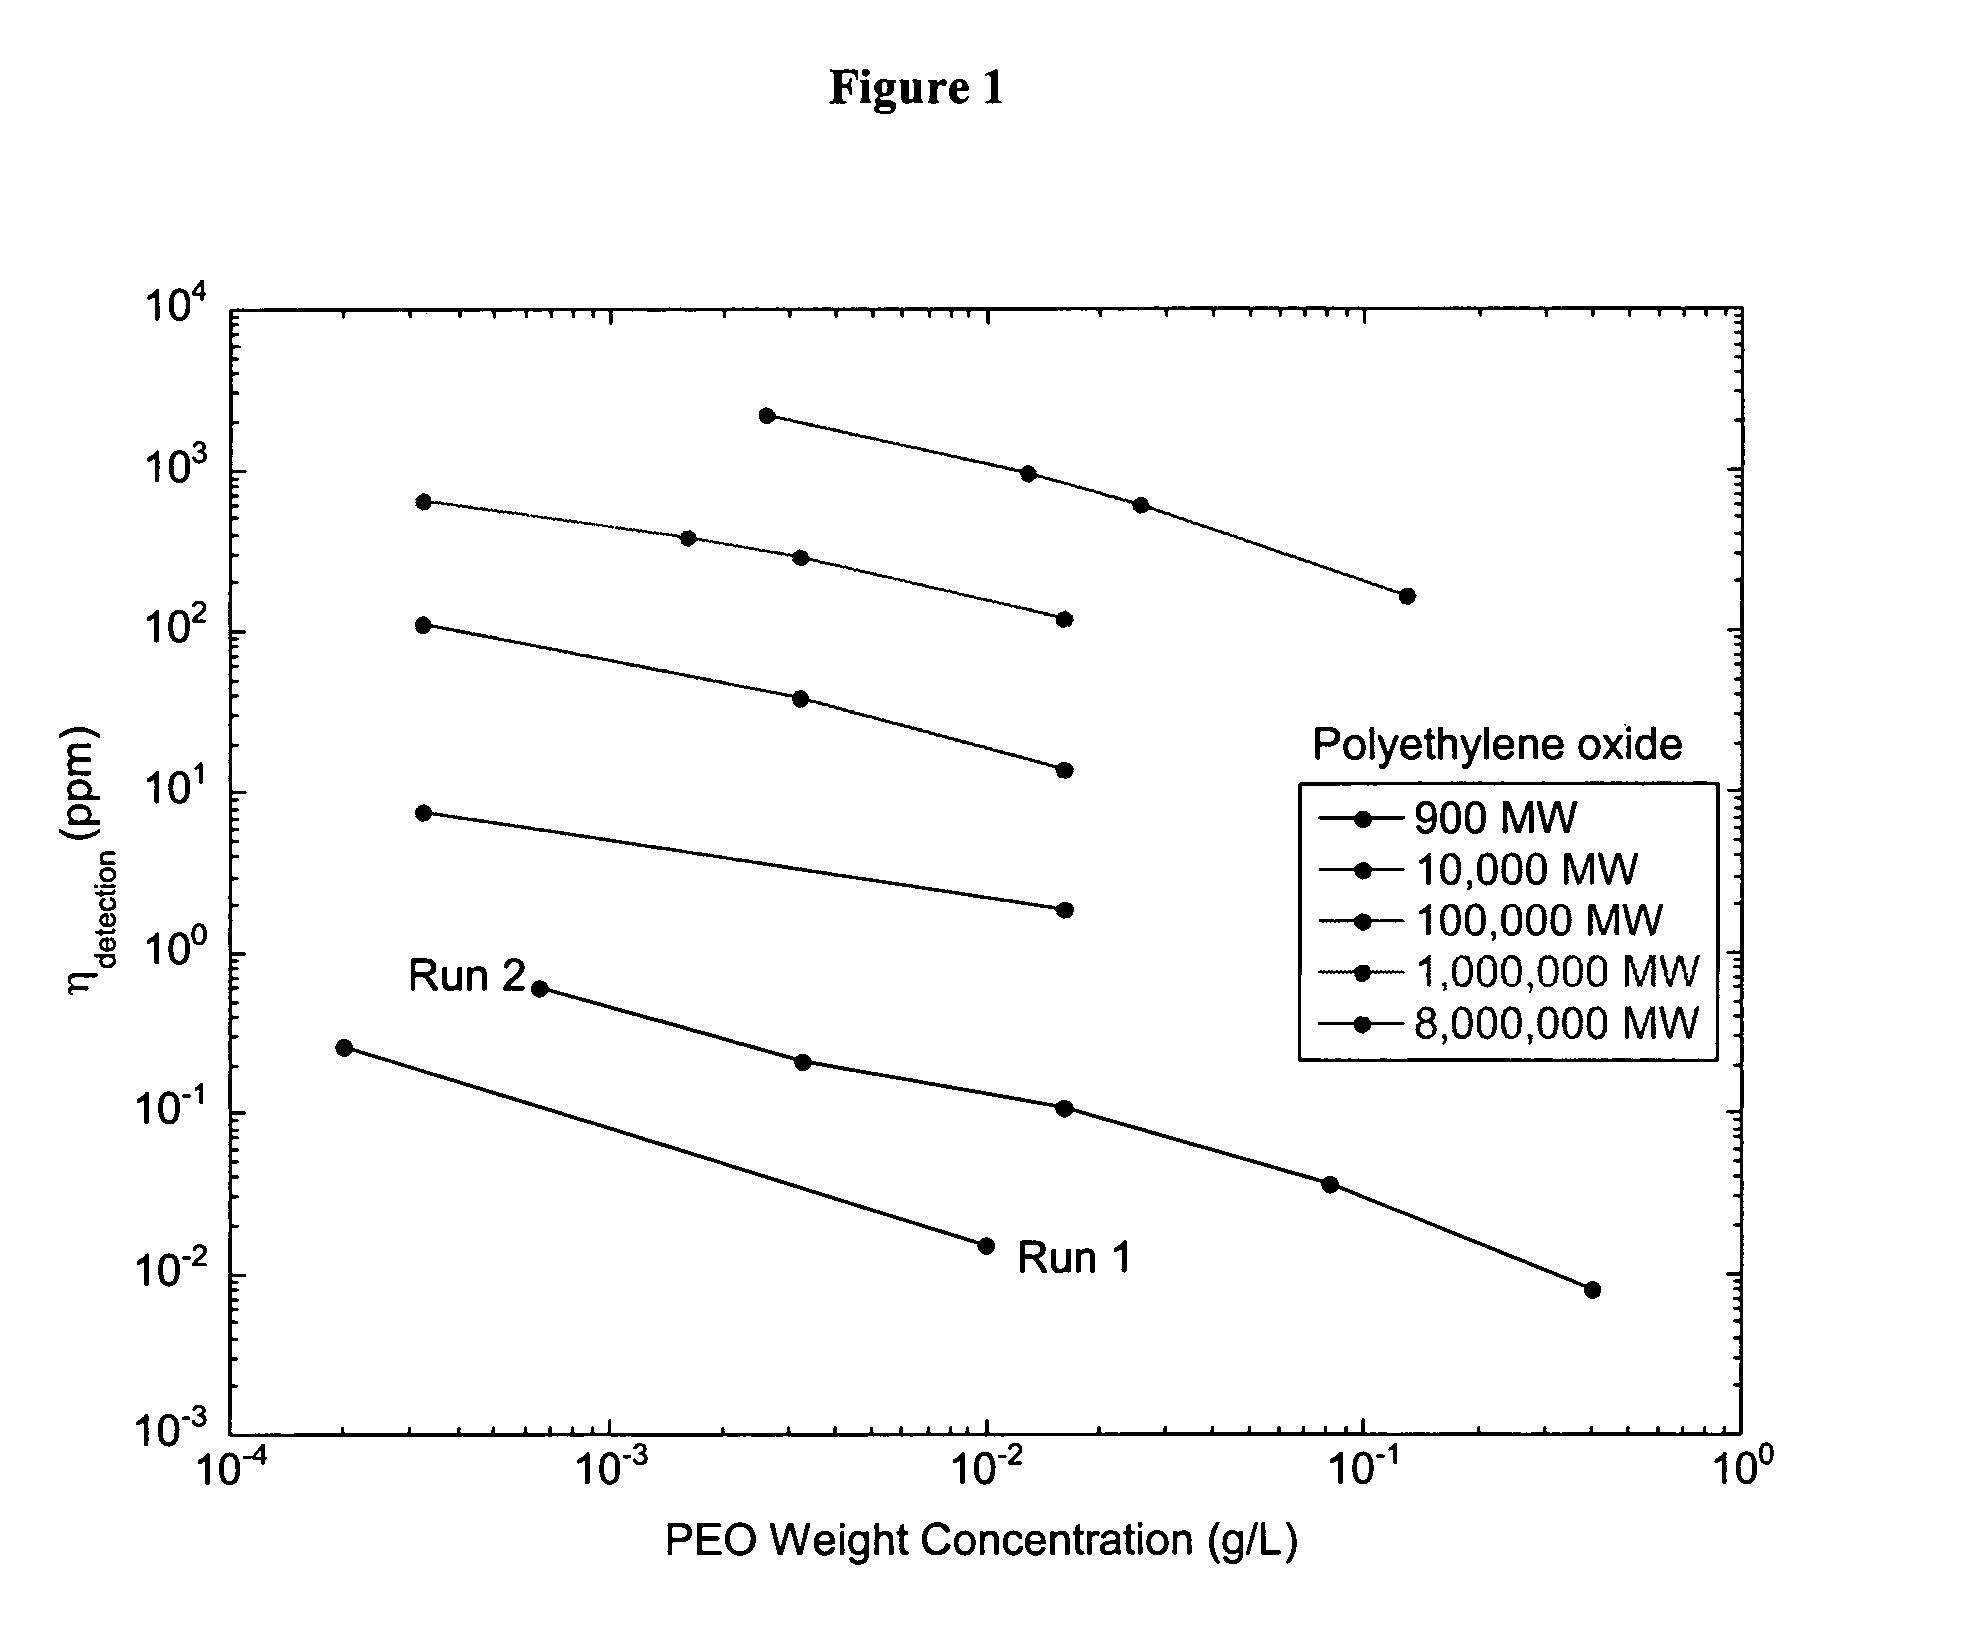 Method for increasing ionization efficiency in mass spectroscopy